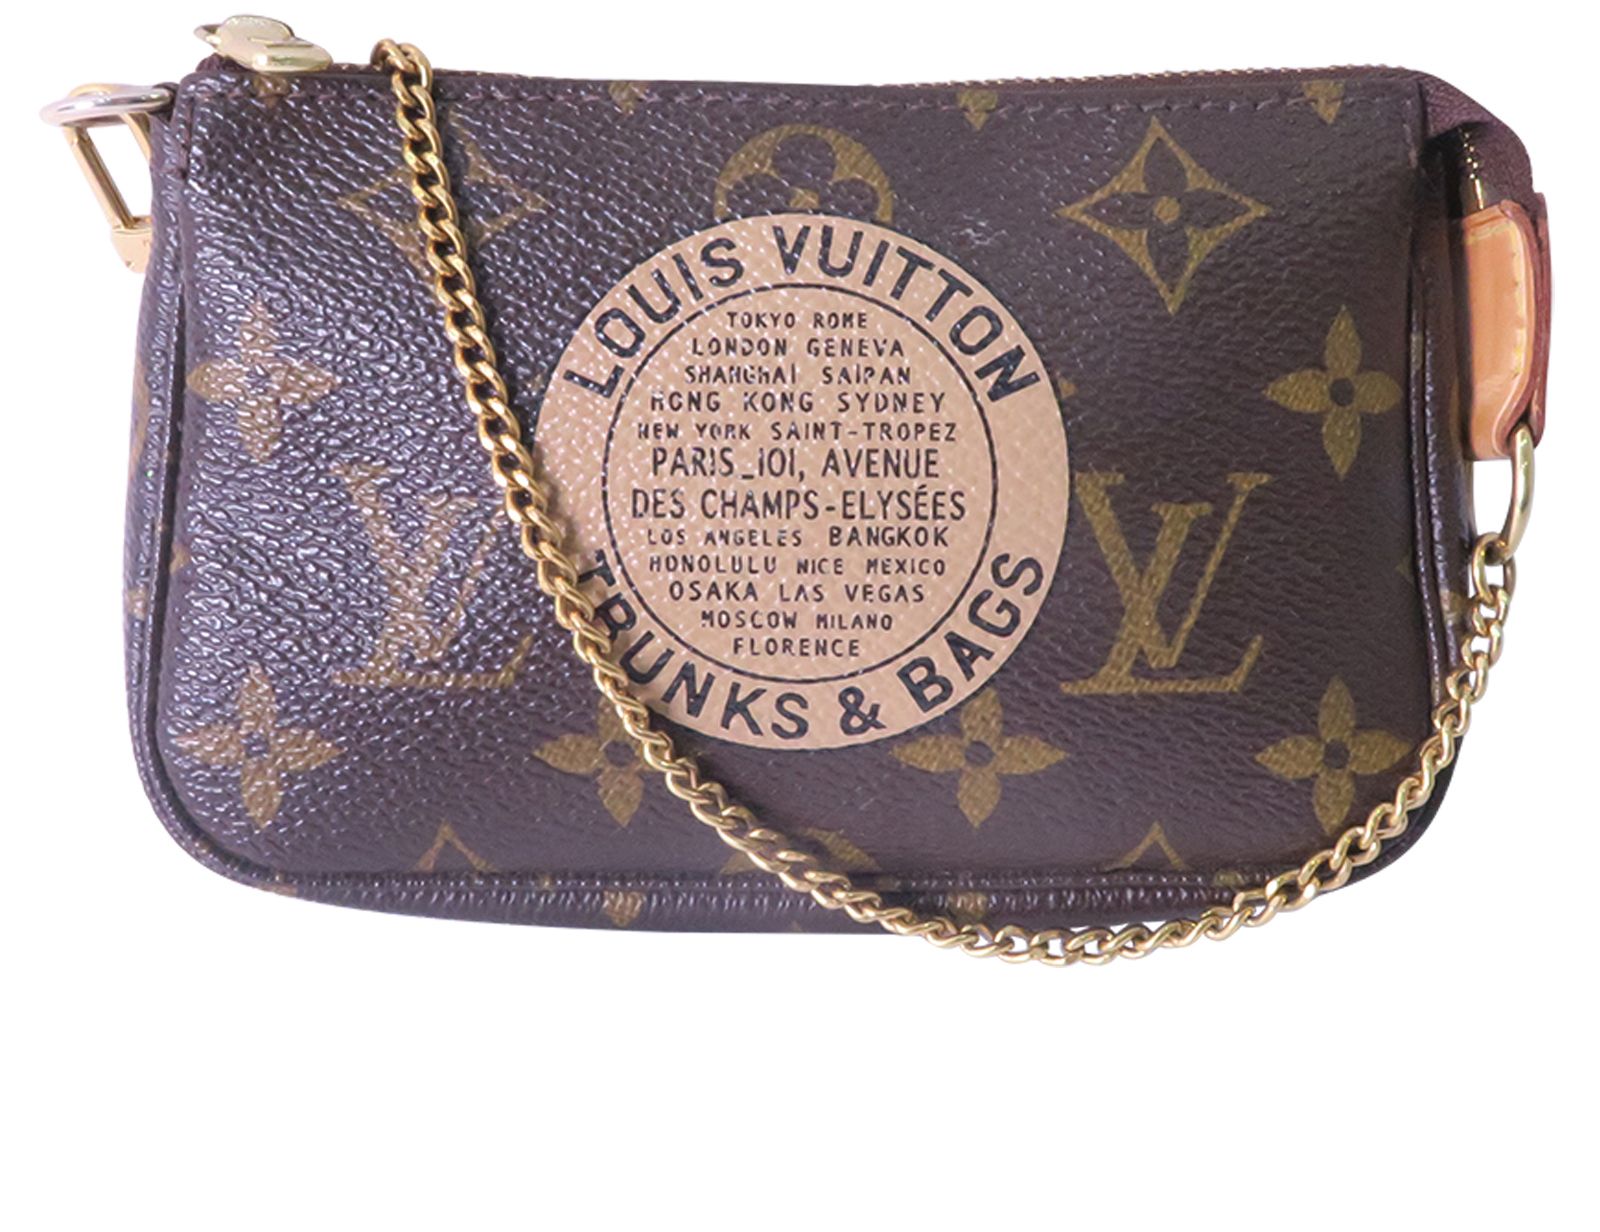 Marsupio Louis Vuitton in 36012 Asiago for €40.00 for sale